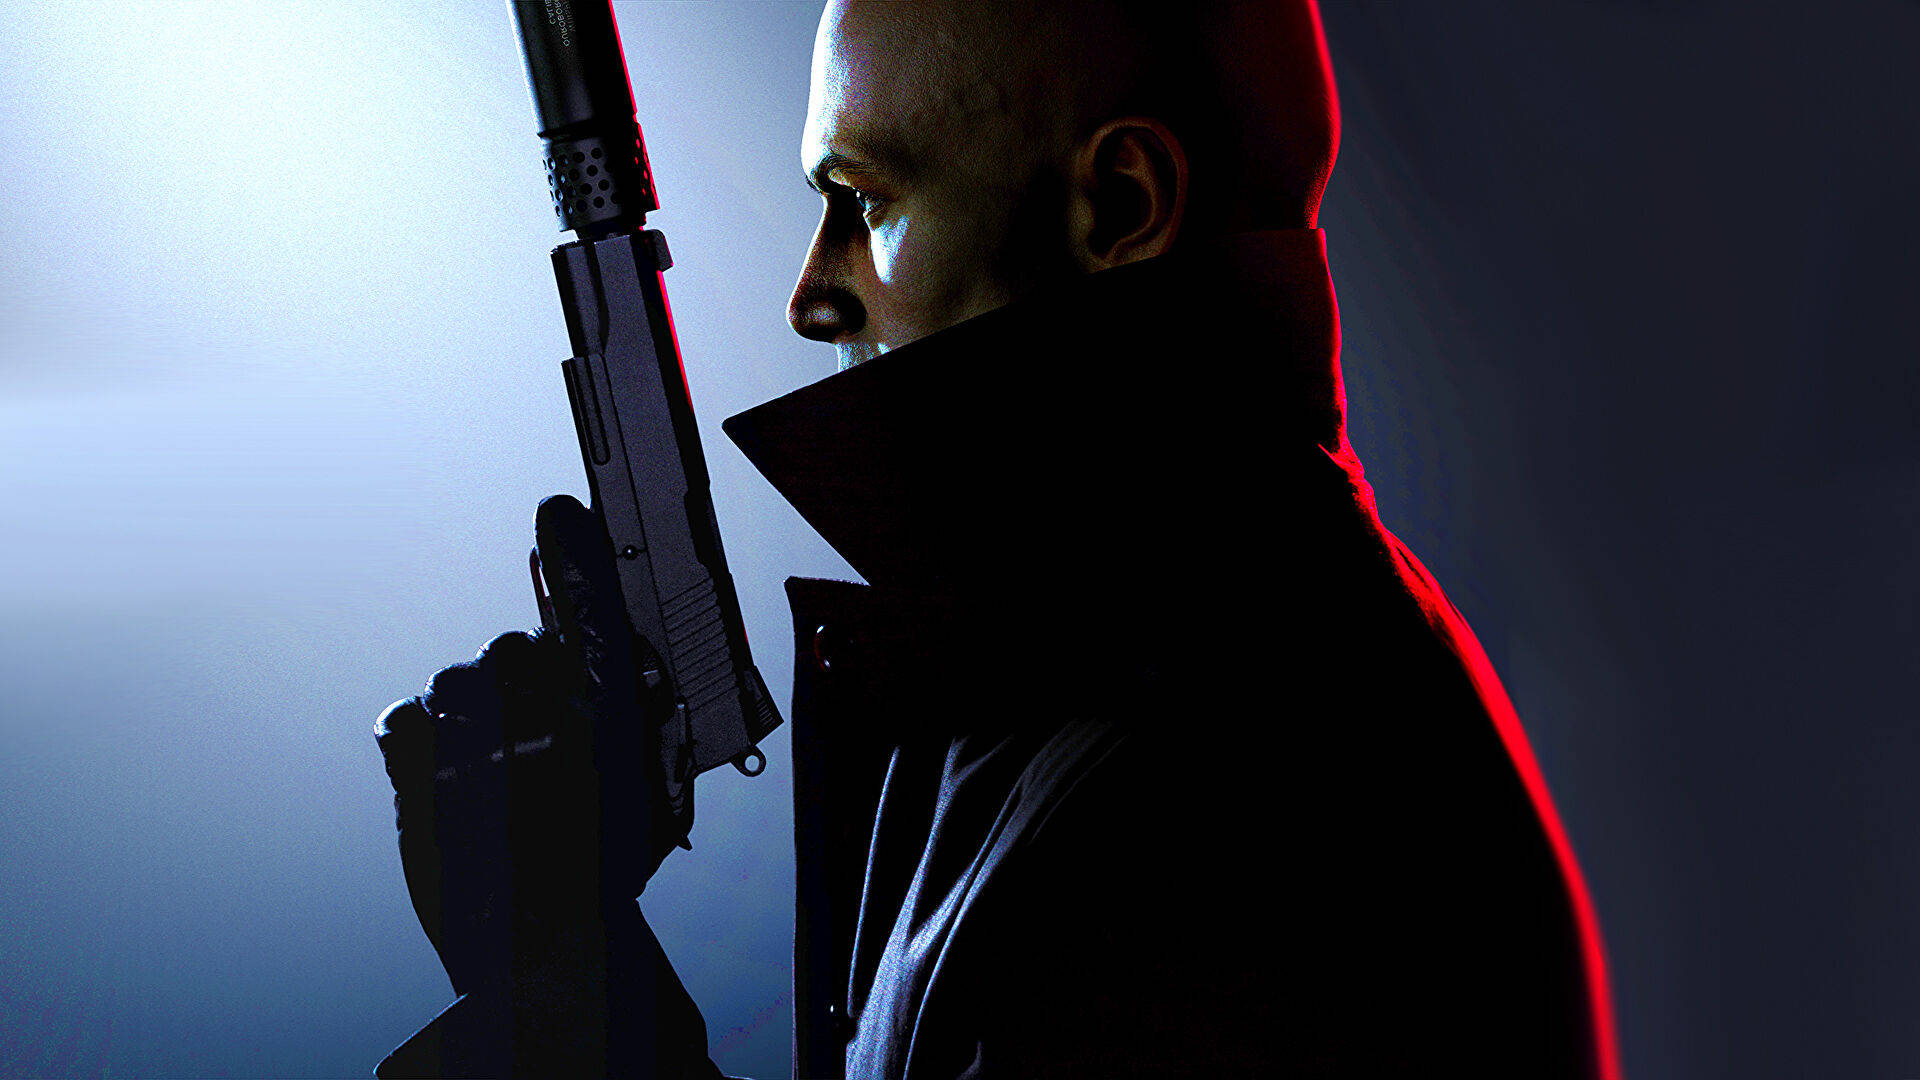 Download Agent 47 Aiming Up Pistol Hitman 2018 Wallpaper 